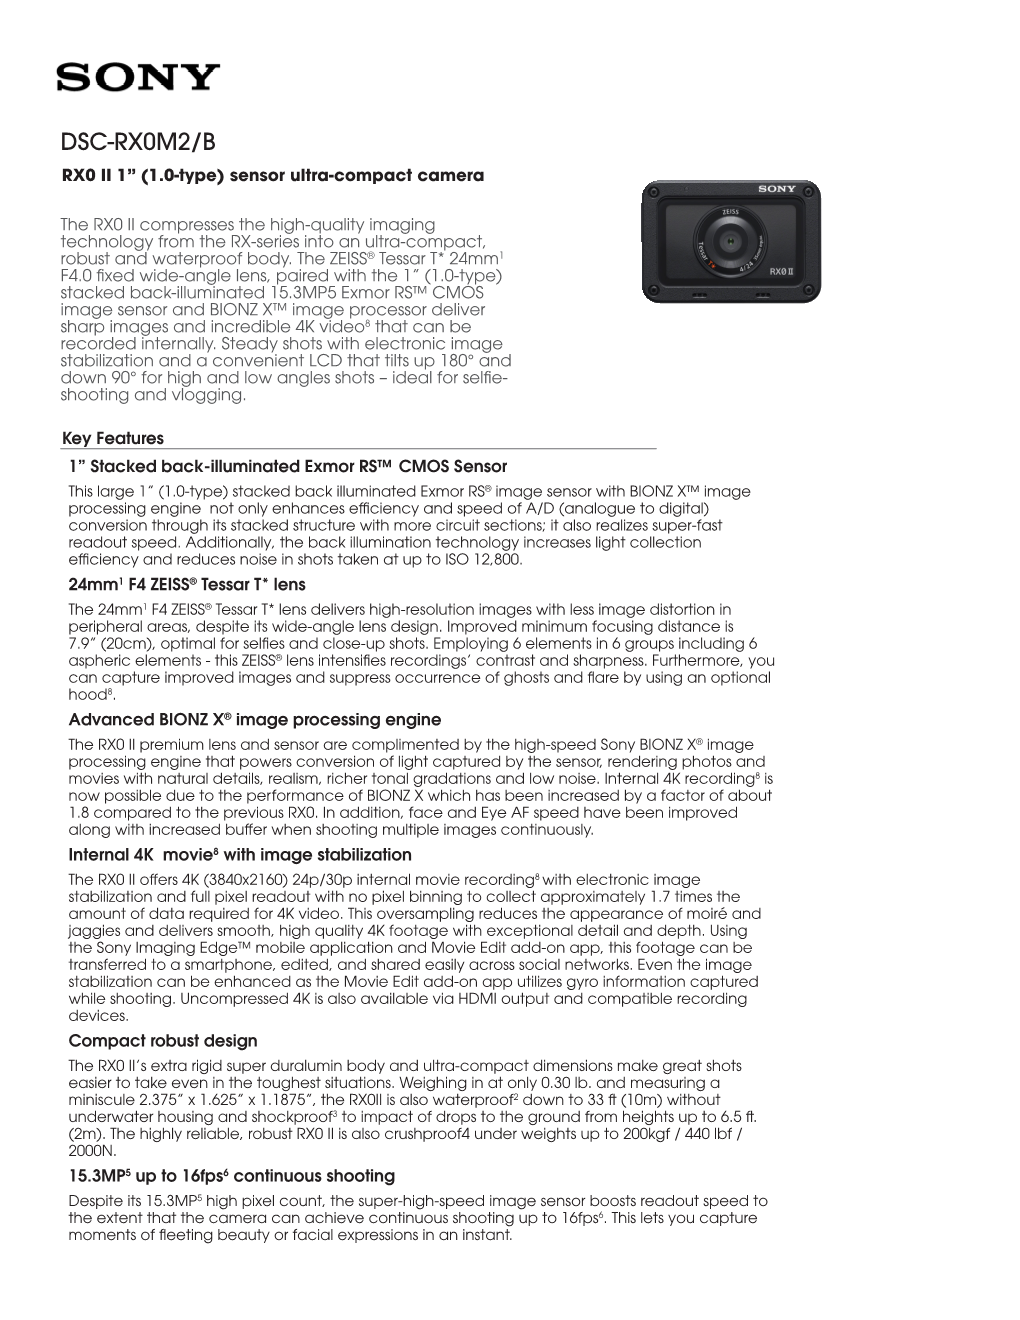 DSC-RX0M2/B RX0 II 1” (1.0-Type) Sensor Ultra-Compact Camera